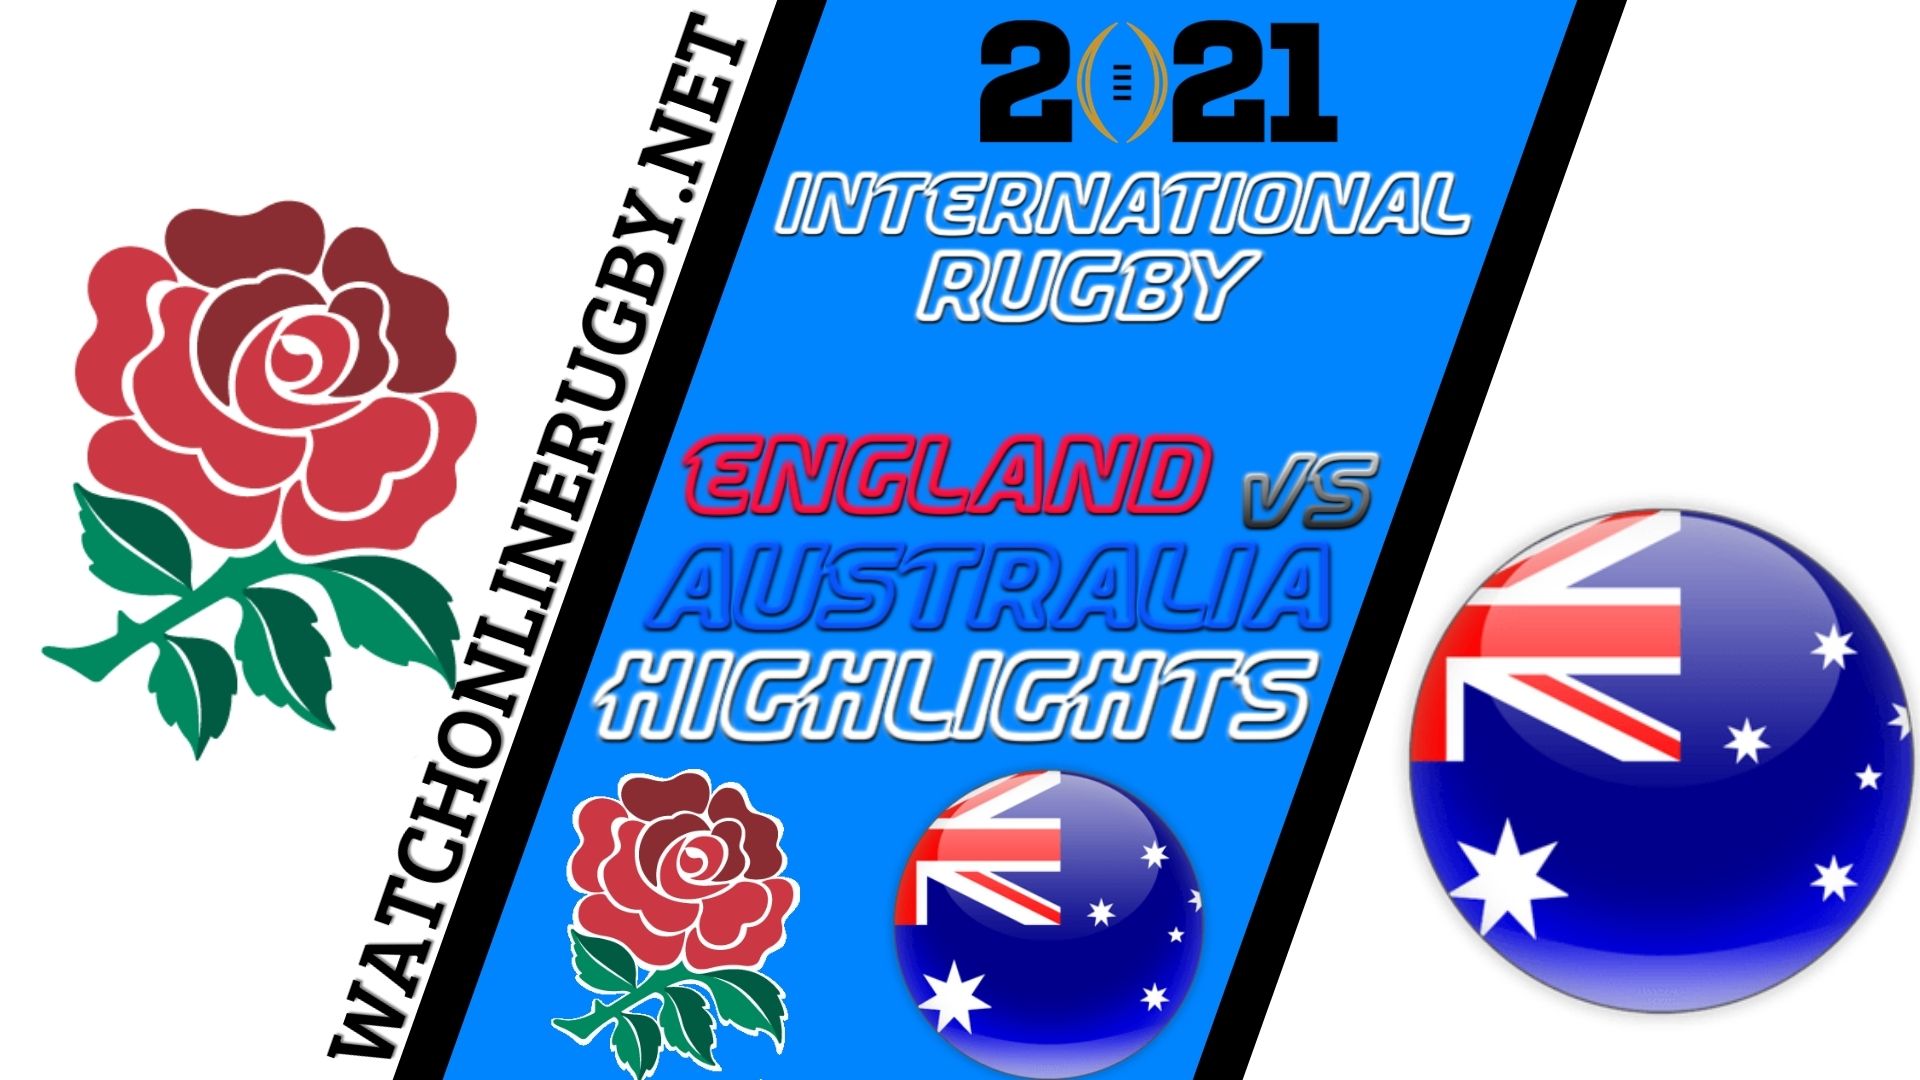 England Vs Australia International Rugby 2021